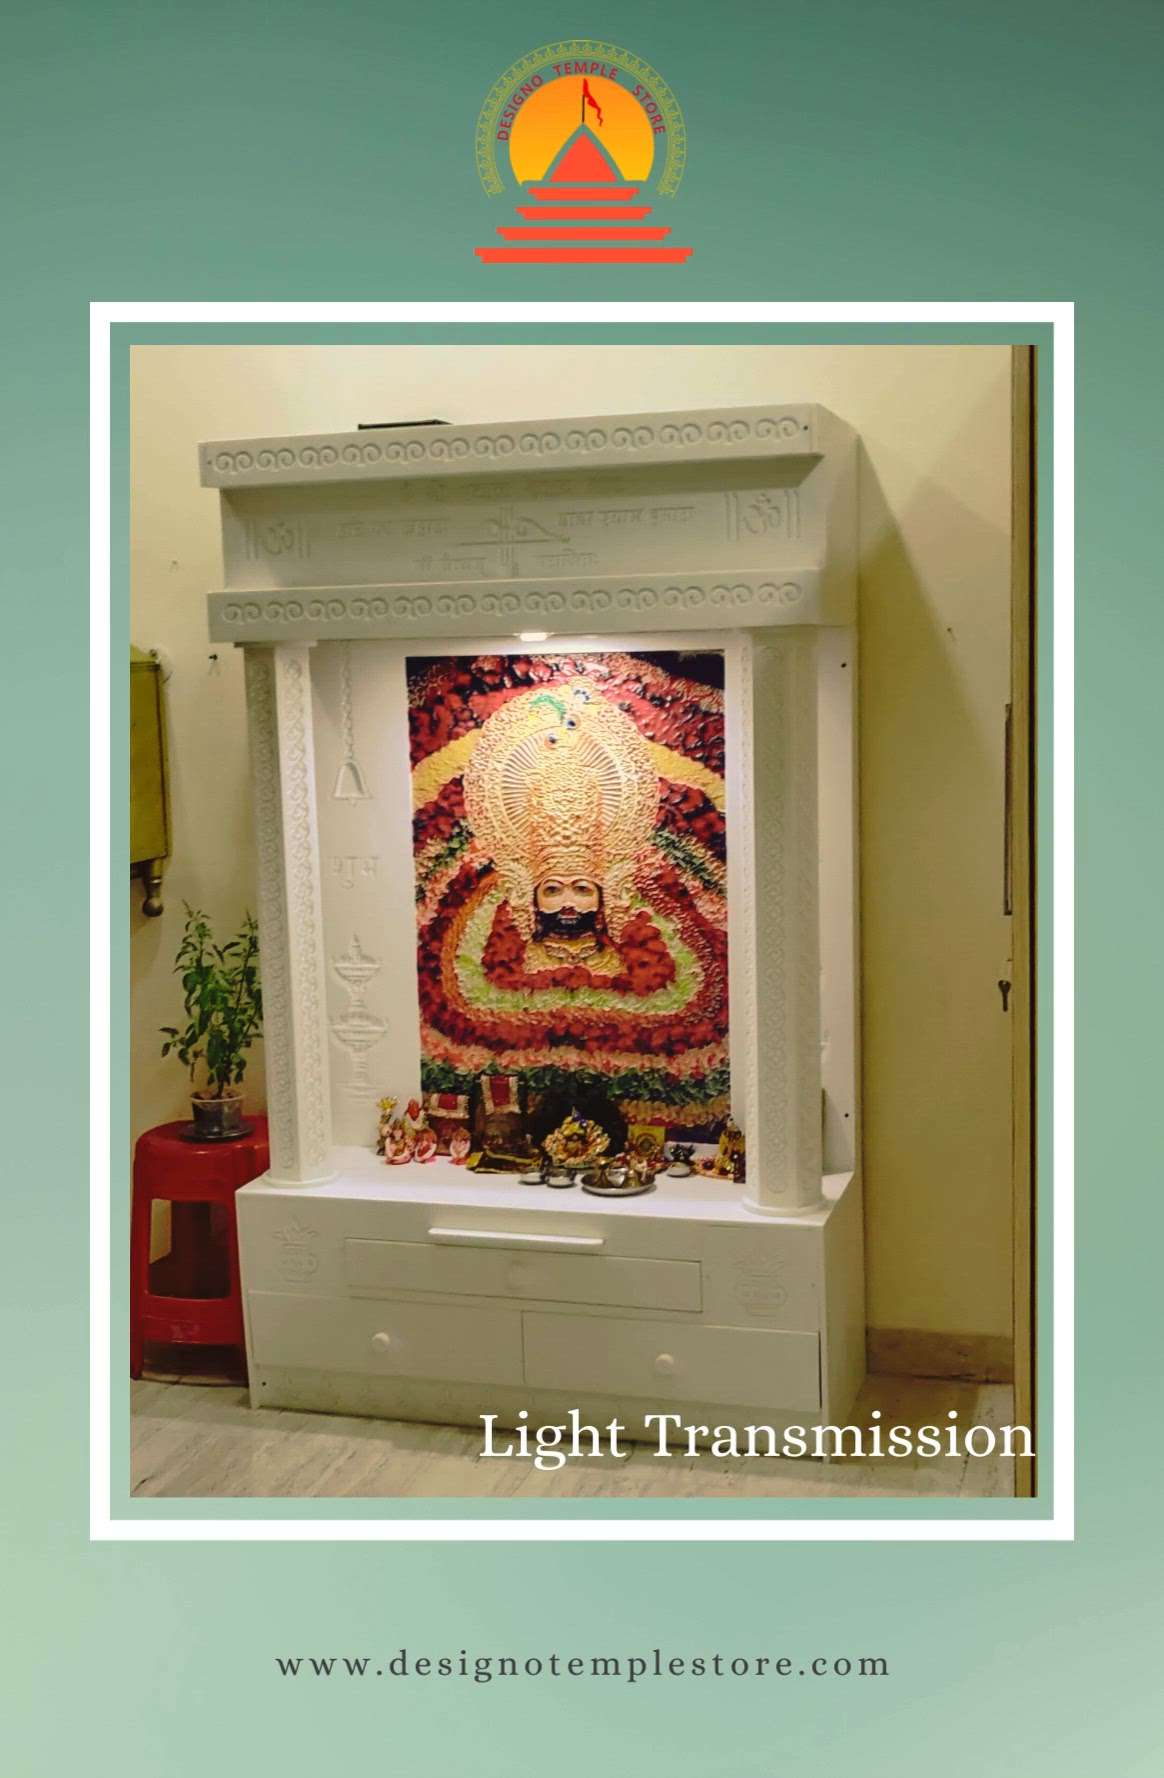 Hare Ka Sahara Baba Shyam Hamara
.
.
Customization is also available please contact us:
.
📞 +91-7503870299
🌐 www.designotemplestore.com
.
.
.
#coraintemple #corainramtemple #designotemplestore #mandir #backlit #mandirwithbacklit #3Dtemple #instadaily #instalike #instapost #corianmandir #homemandir #homedecor #lightingmandir #temple #backlittemple #instagood #corainmandir #radheradhe #jaishrikrishna #khatushyam #coraintemplewithbacklit #customisemandir #homemandir #coriantemplecreations #khatushyamcoraintemple #khatucorainmandir #HareKaSaharaBabaShyamHamara #khatunaresh #customisecorainmandir #jaishreeshyam #viralvideos #dailypost  #coriantempleforhome #explorepage #trending #instareels #viral #trendingreels #vibes #videos #koloapp #koloviral #trendig #InteriorDesigner #HomeDecor